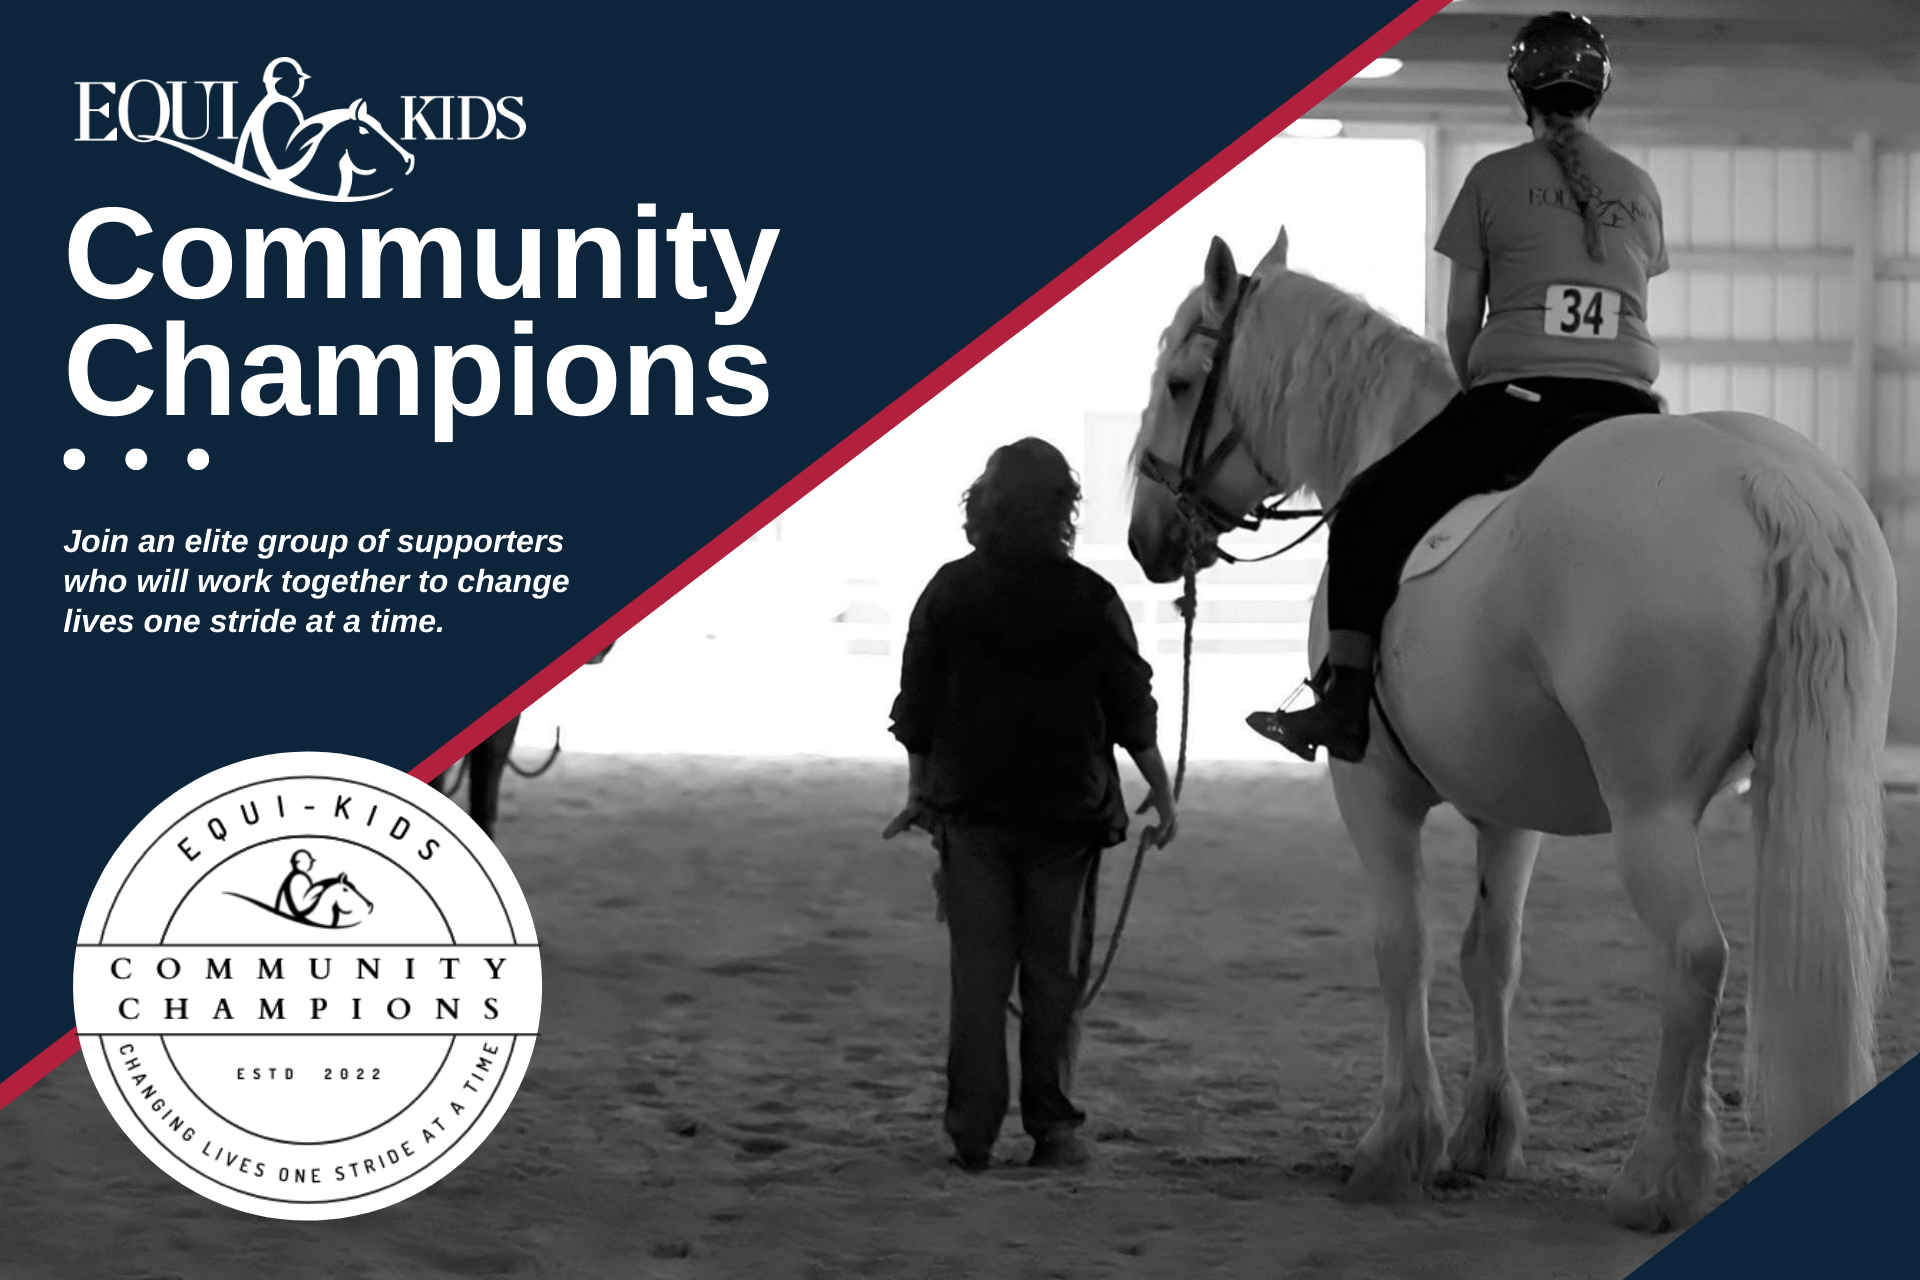 EQUI-KIDS Community Champions